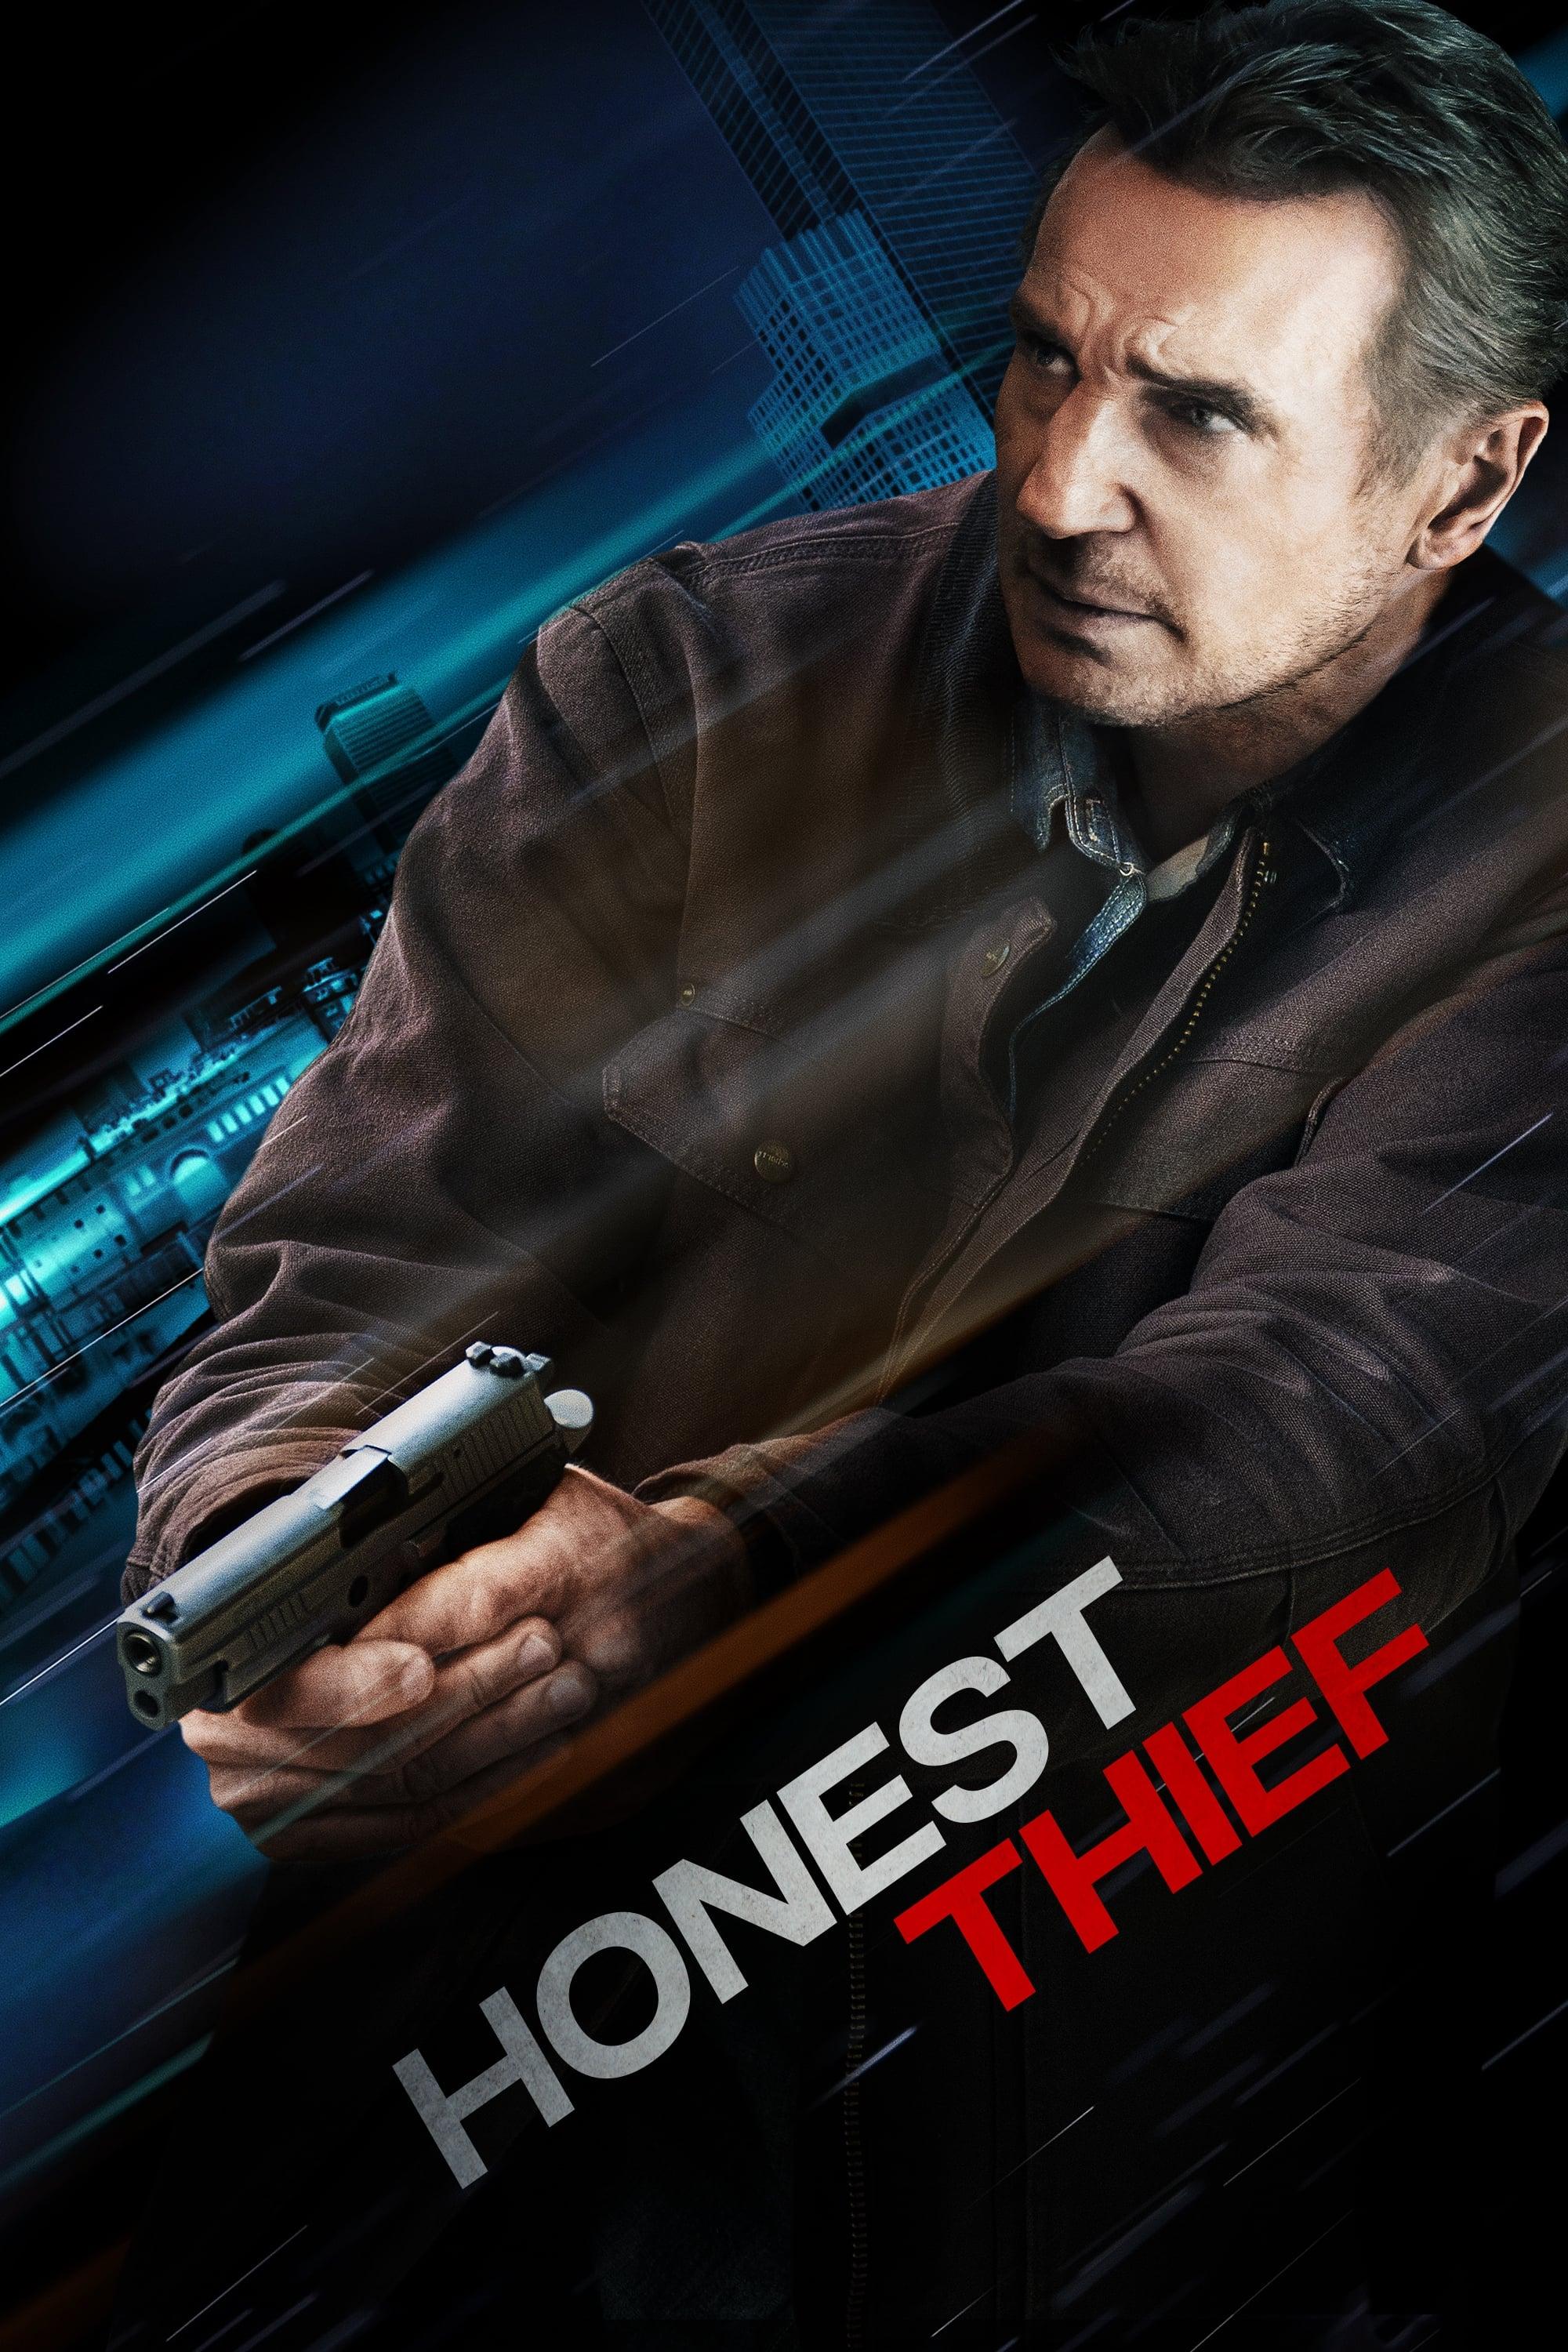 Honest Thief poster